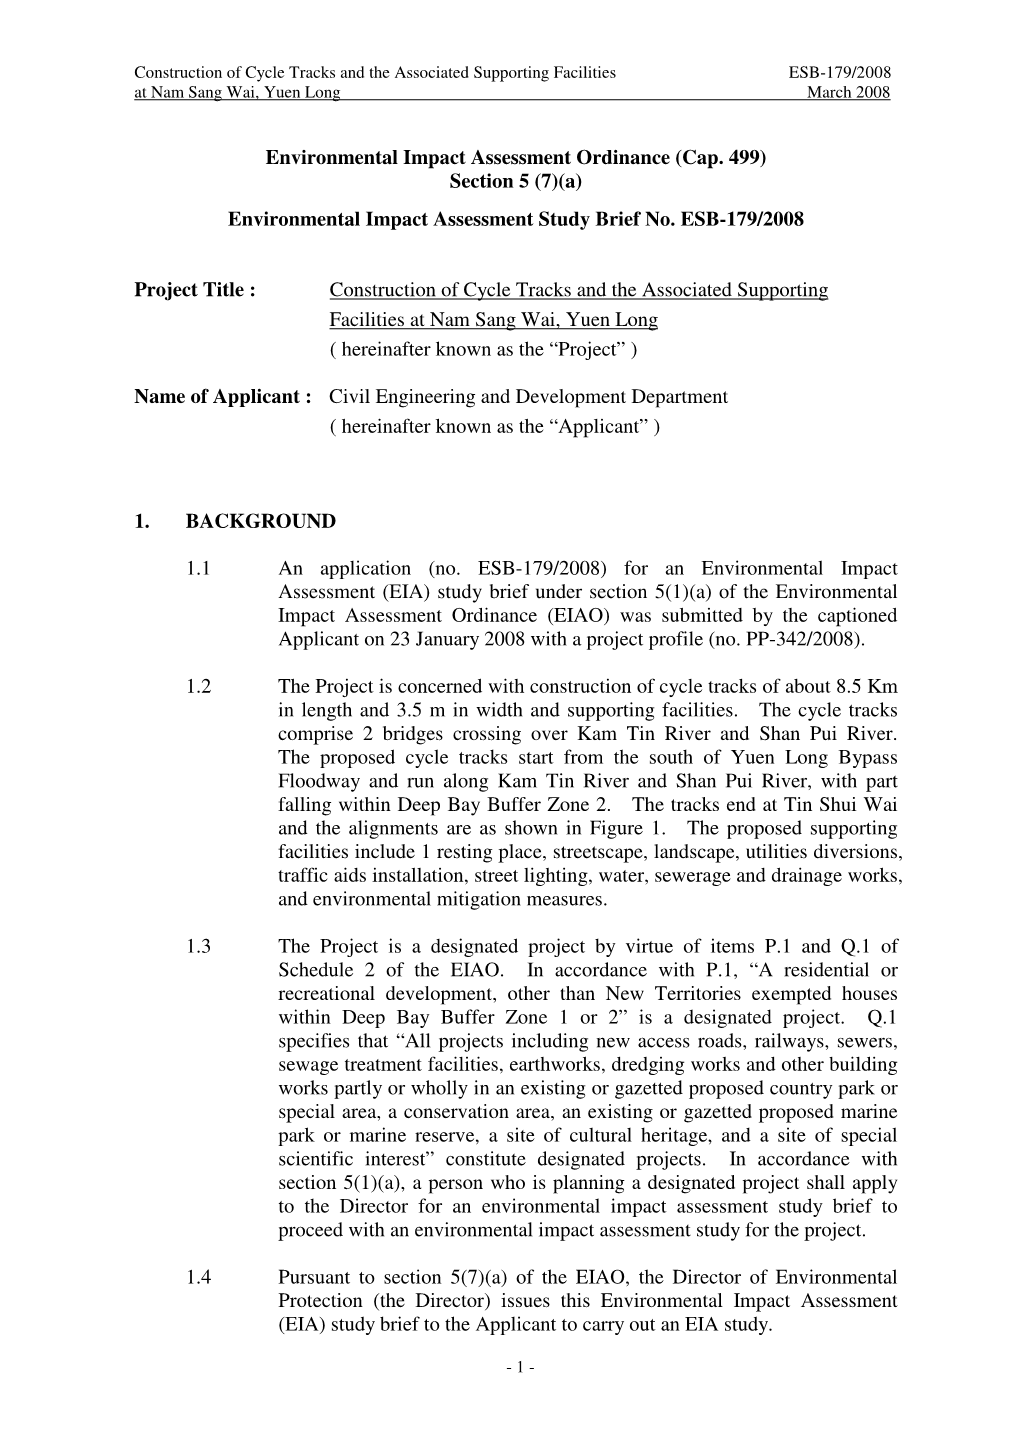 (A) Environmental Impact Assessment Study Brief No. ESB-179/2008